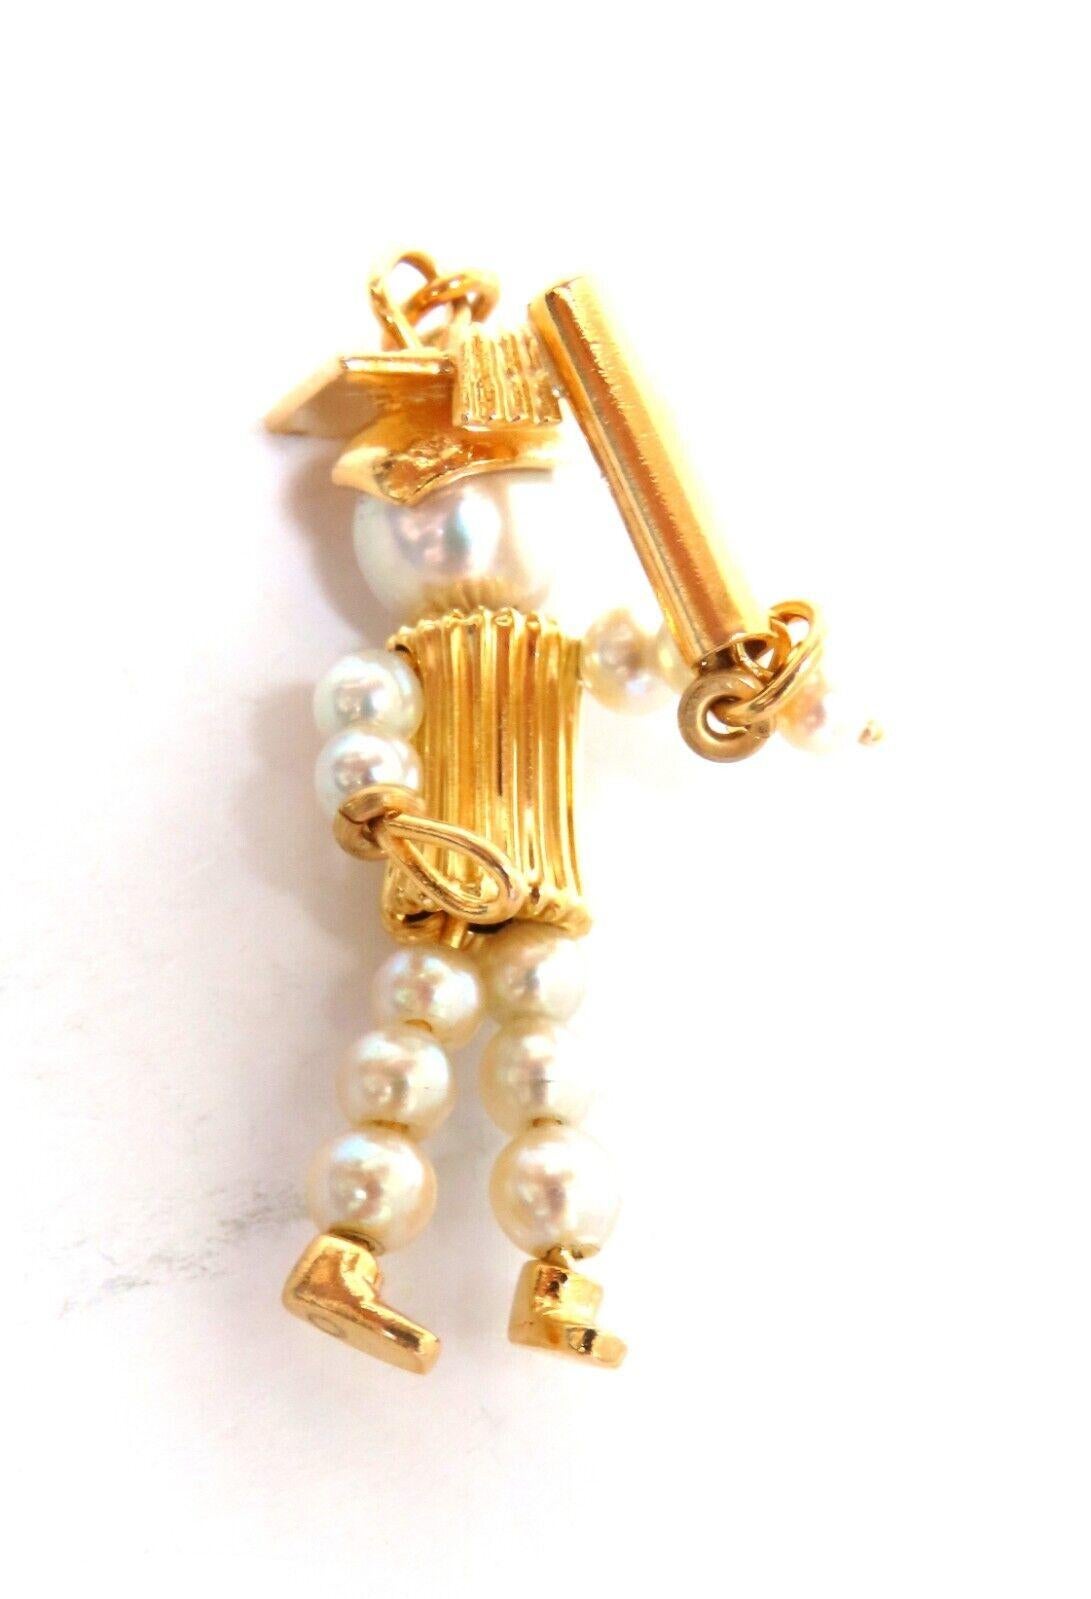 Graduation charm

3 mm natural akoya pearls

Overall: 26 x 13mm

14 karat gold

3.3 grams